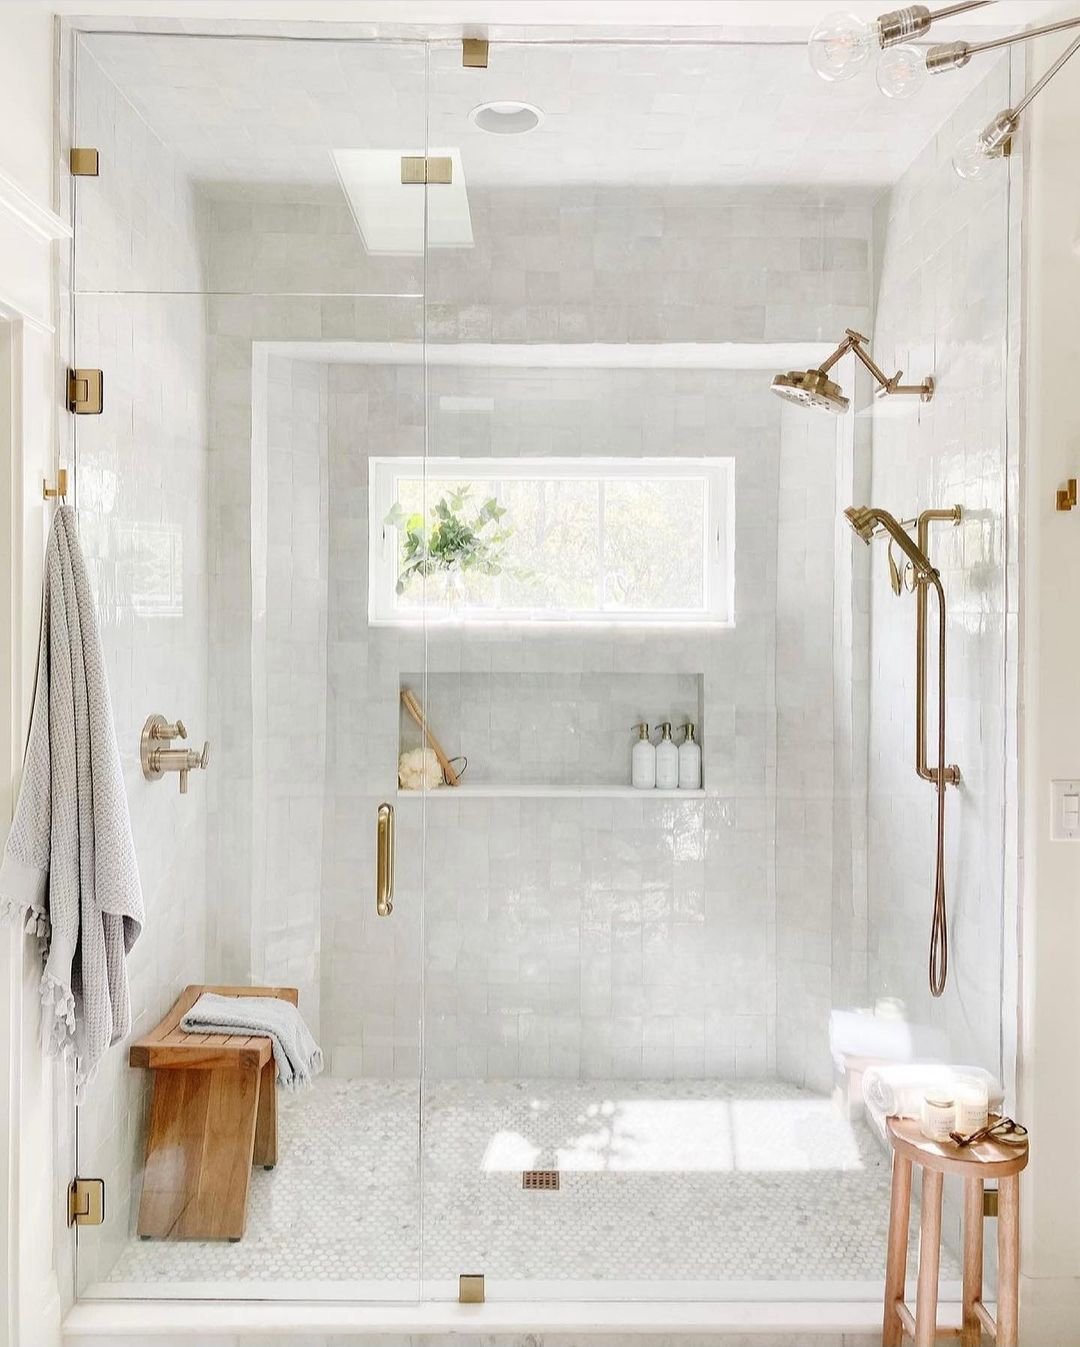 Glass shower example in a farmhouse minimal bathroom